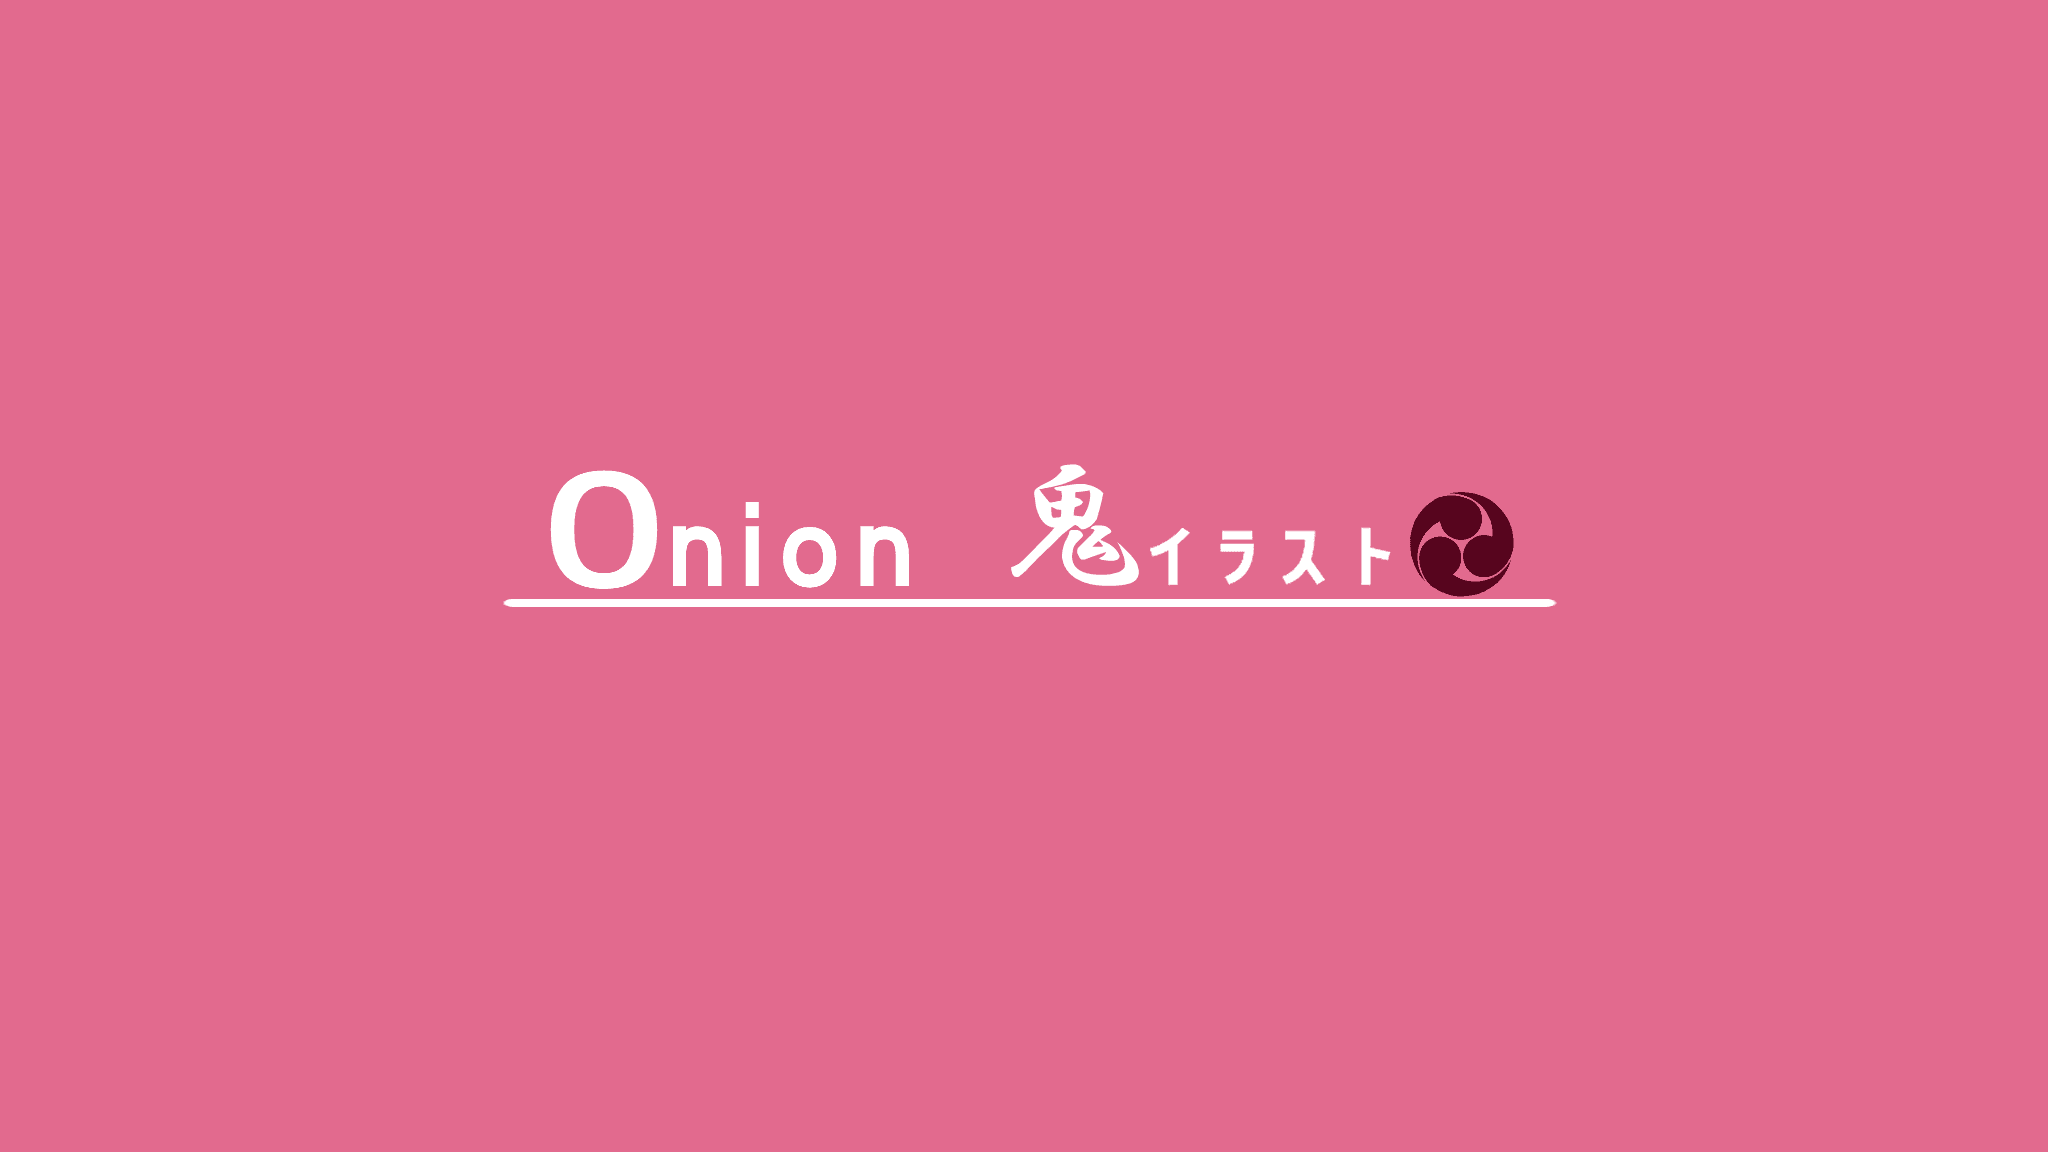 Onion_oni banner